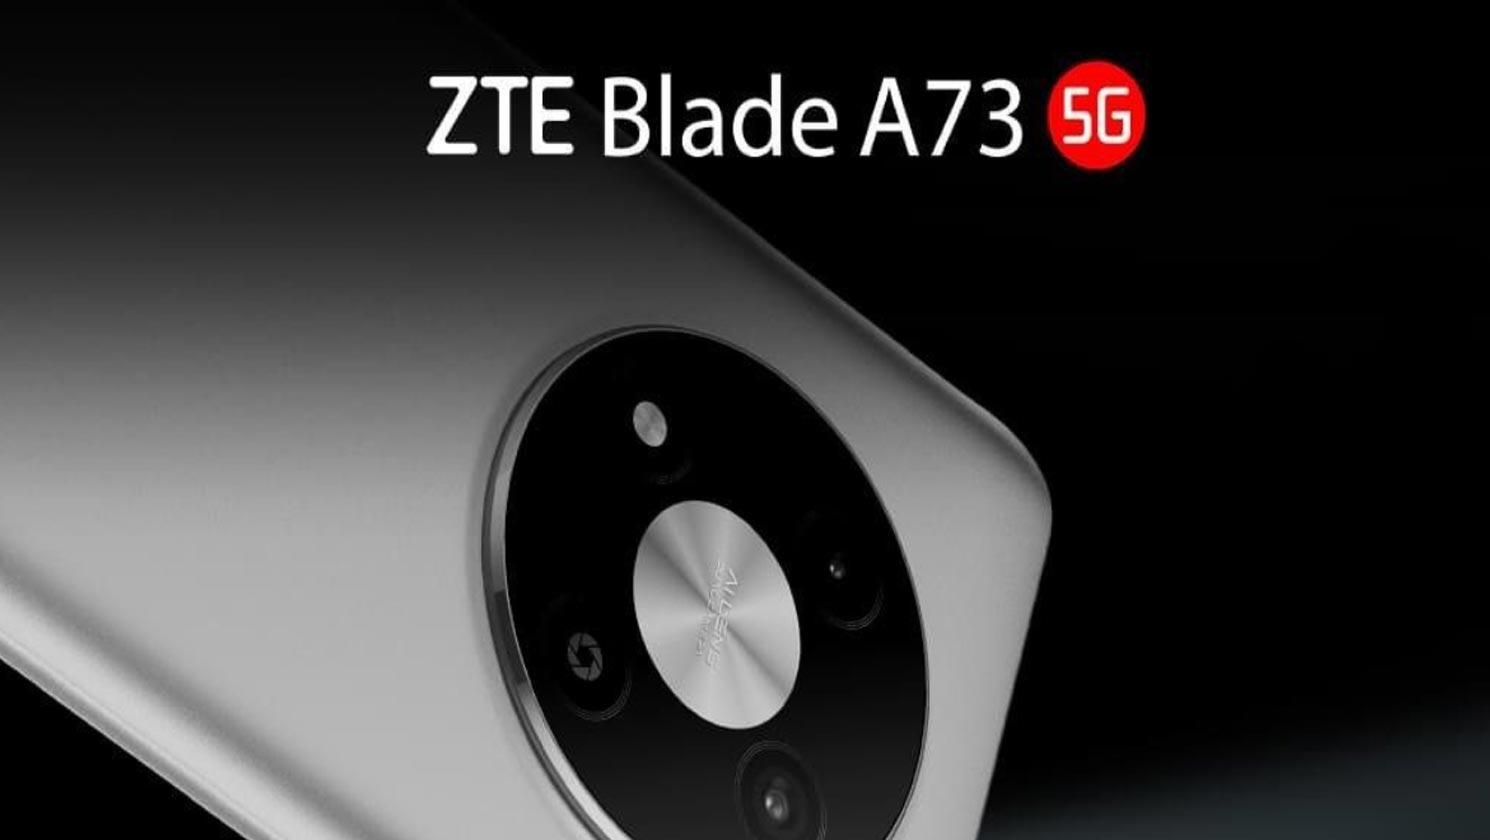 ZTE BLADE A73 5G Specifications & Price ioip Nigeriantech.com.ng